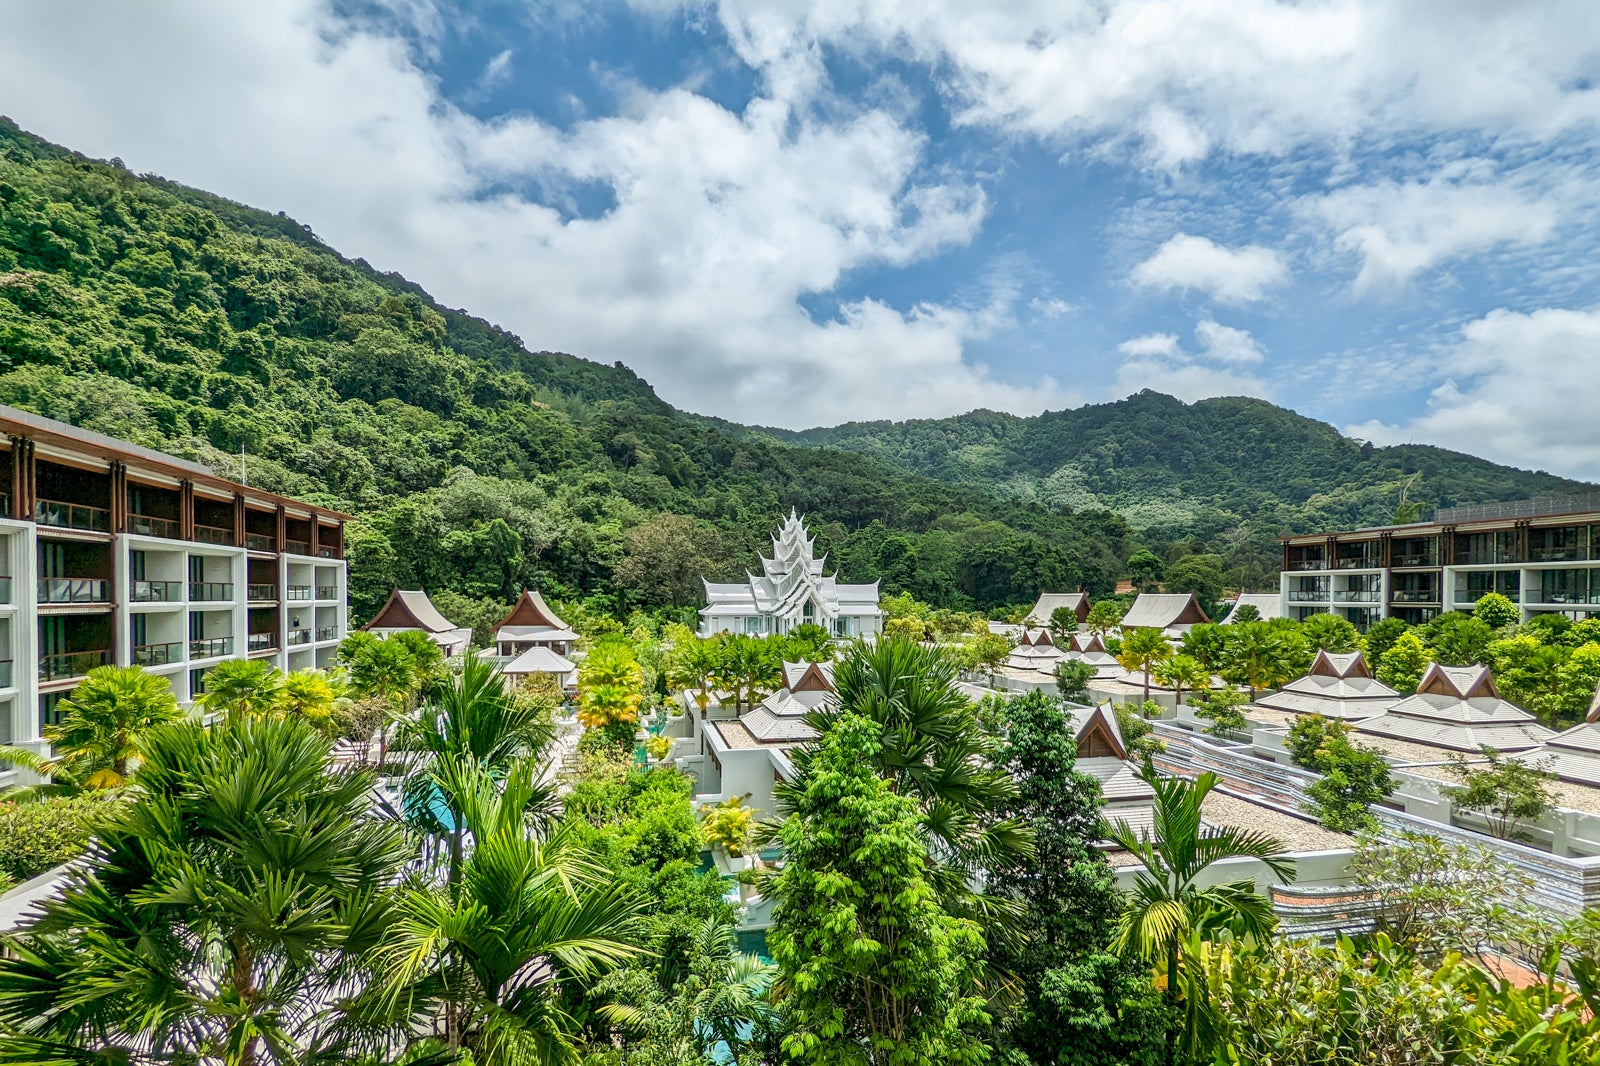 InterContinental Phuket Resort views